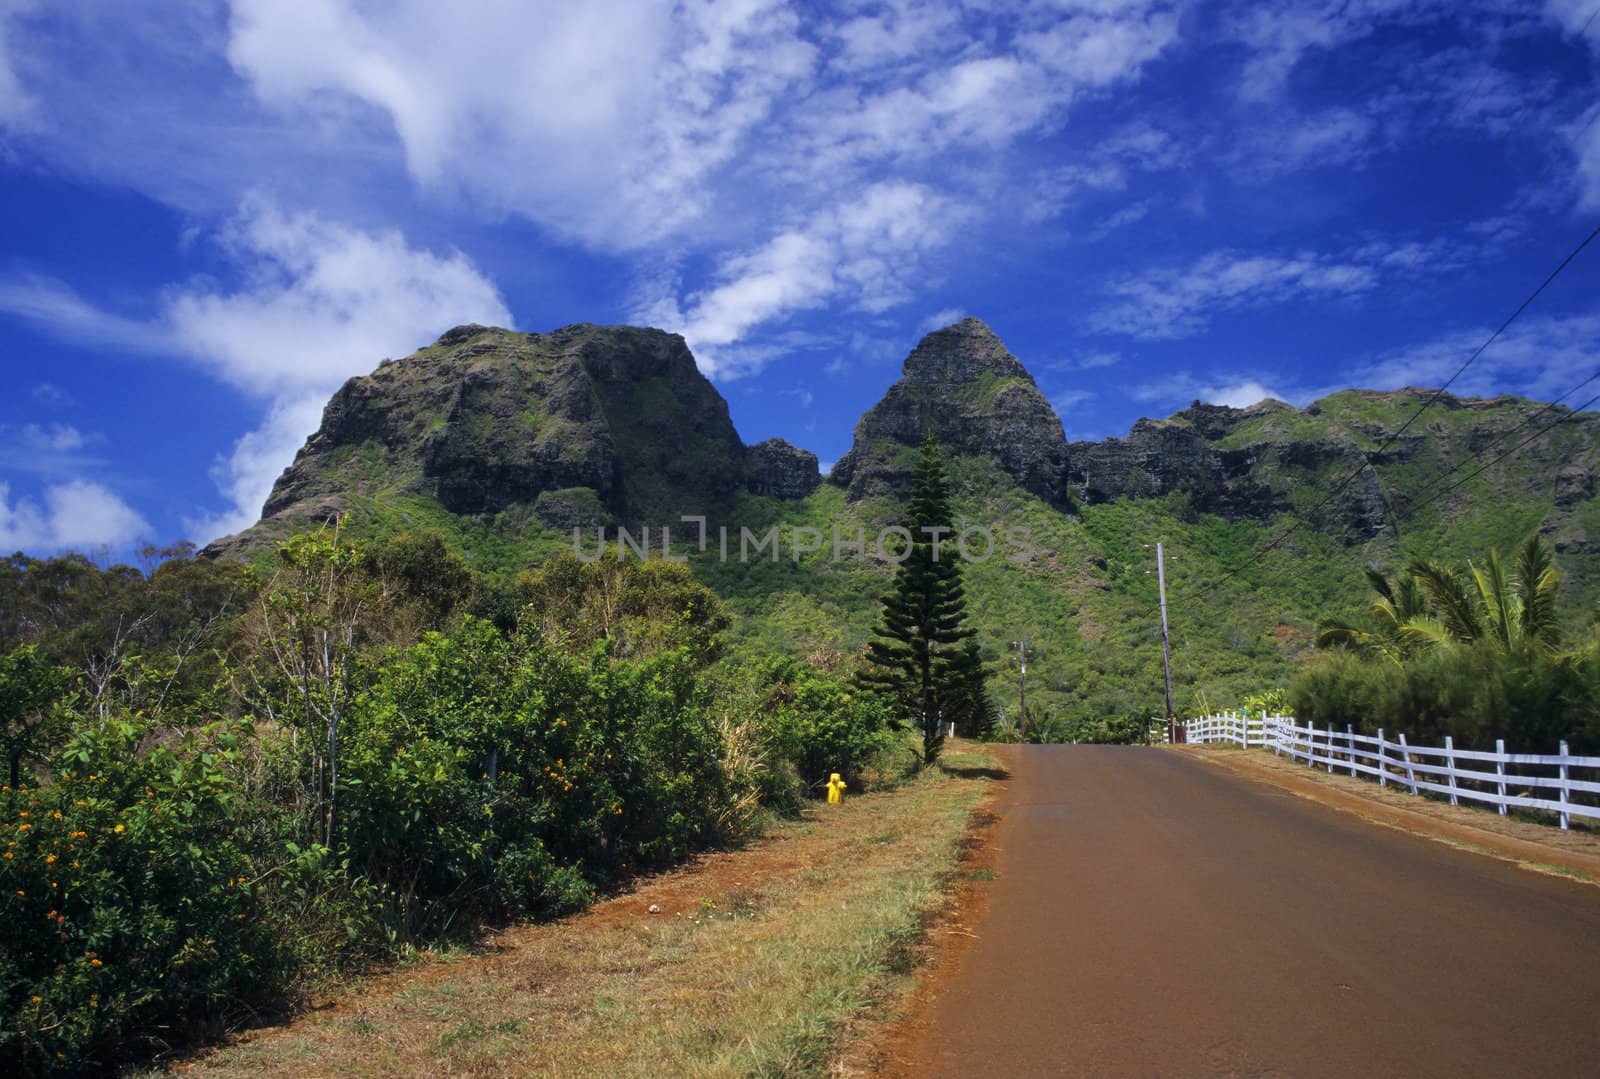 Kauai country road by PJ1960